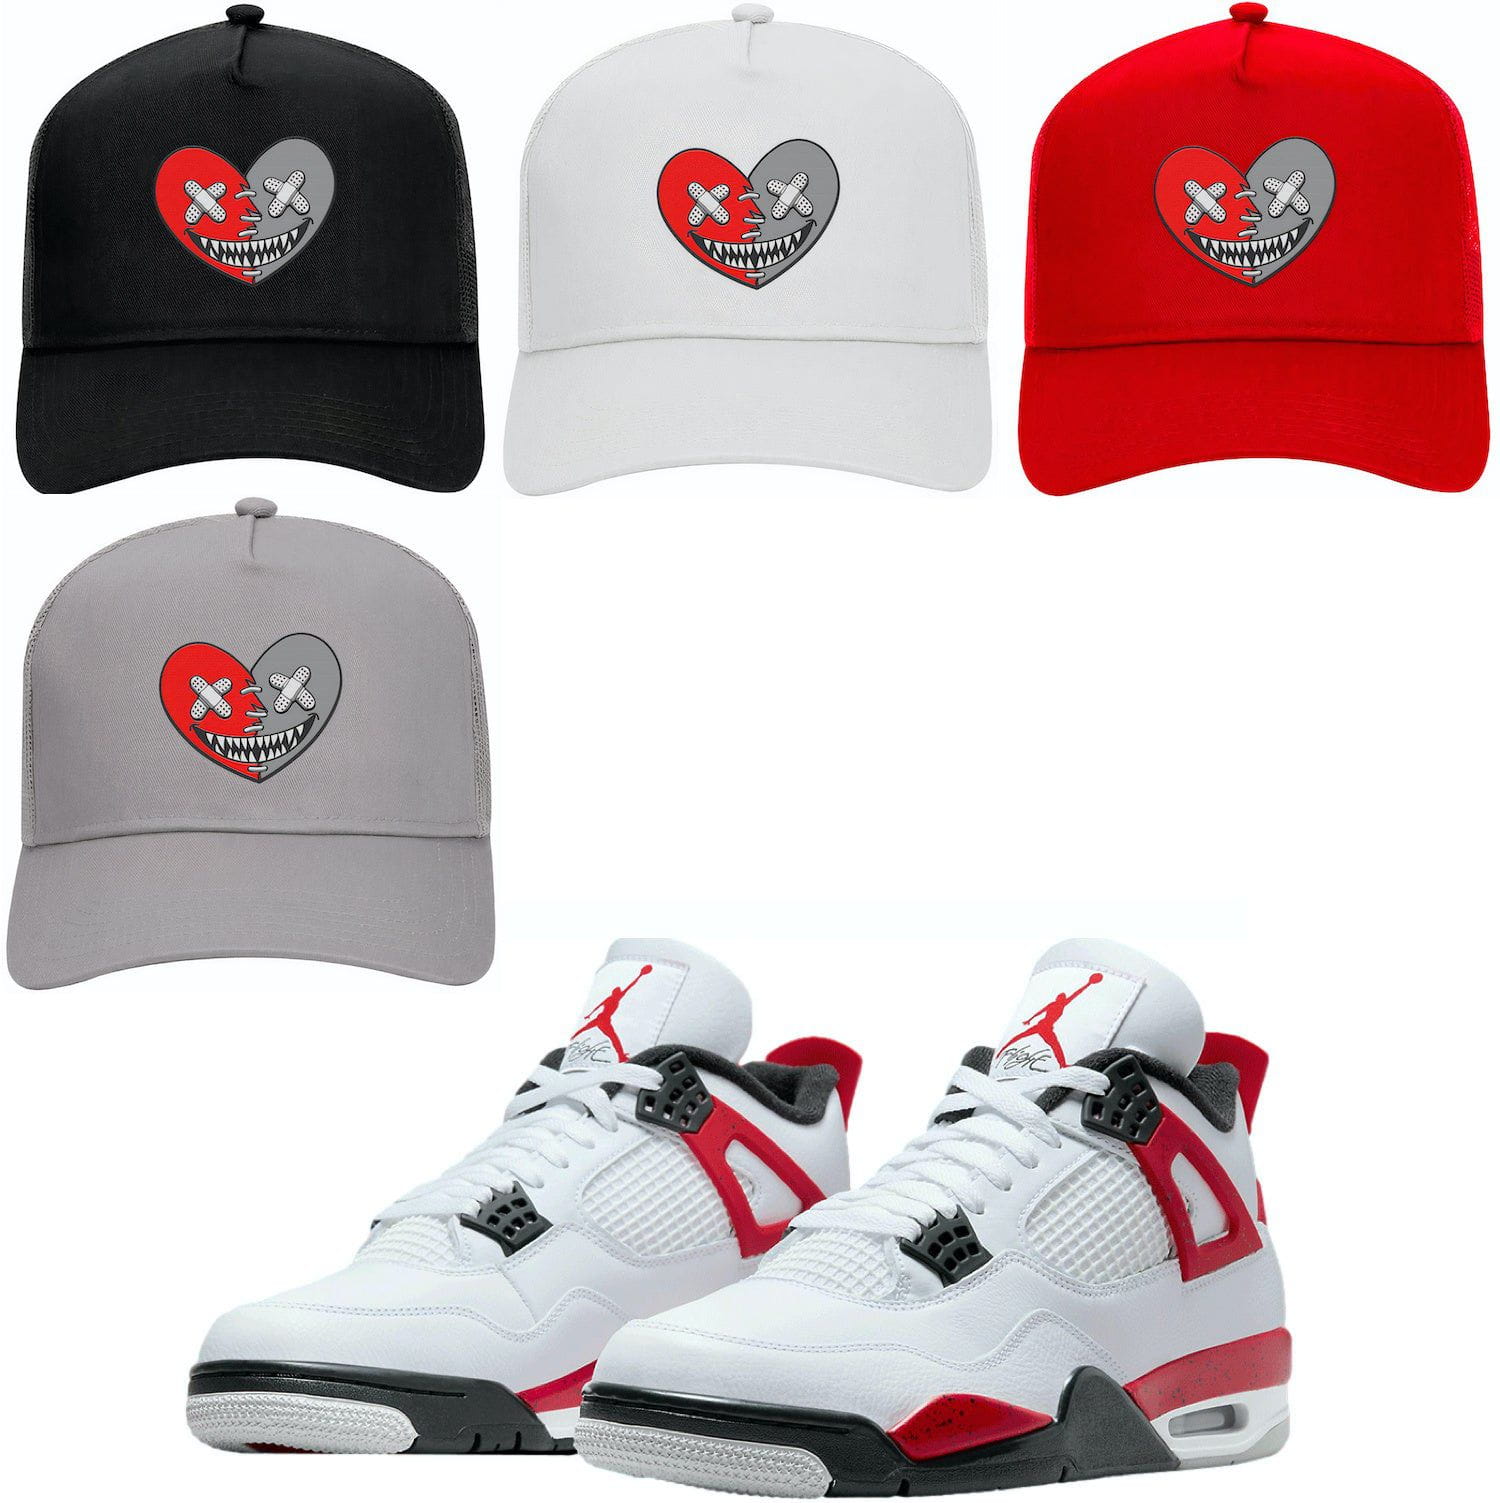 Red Cement 4s Trucker Hats - Jordan 4 Red Cement Hats - Heart